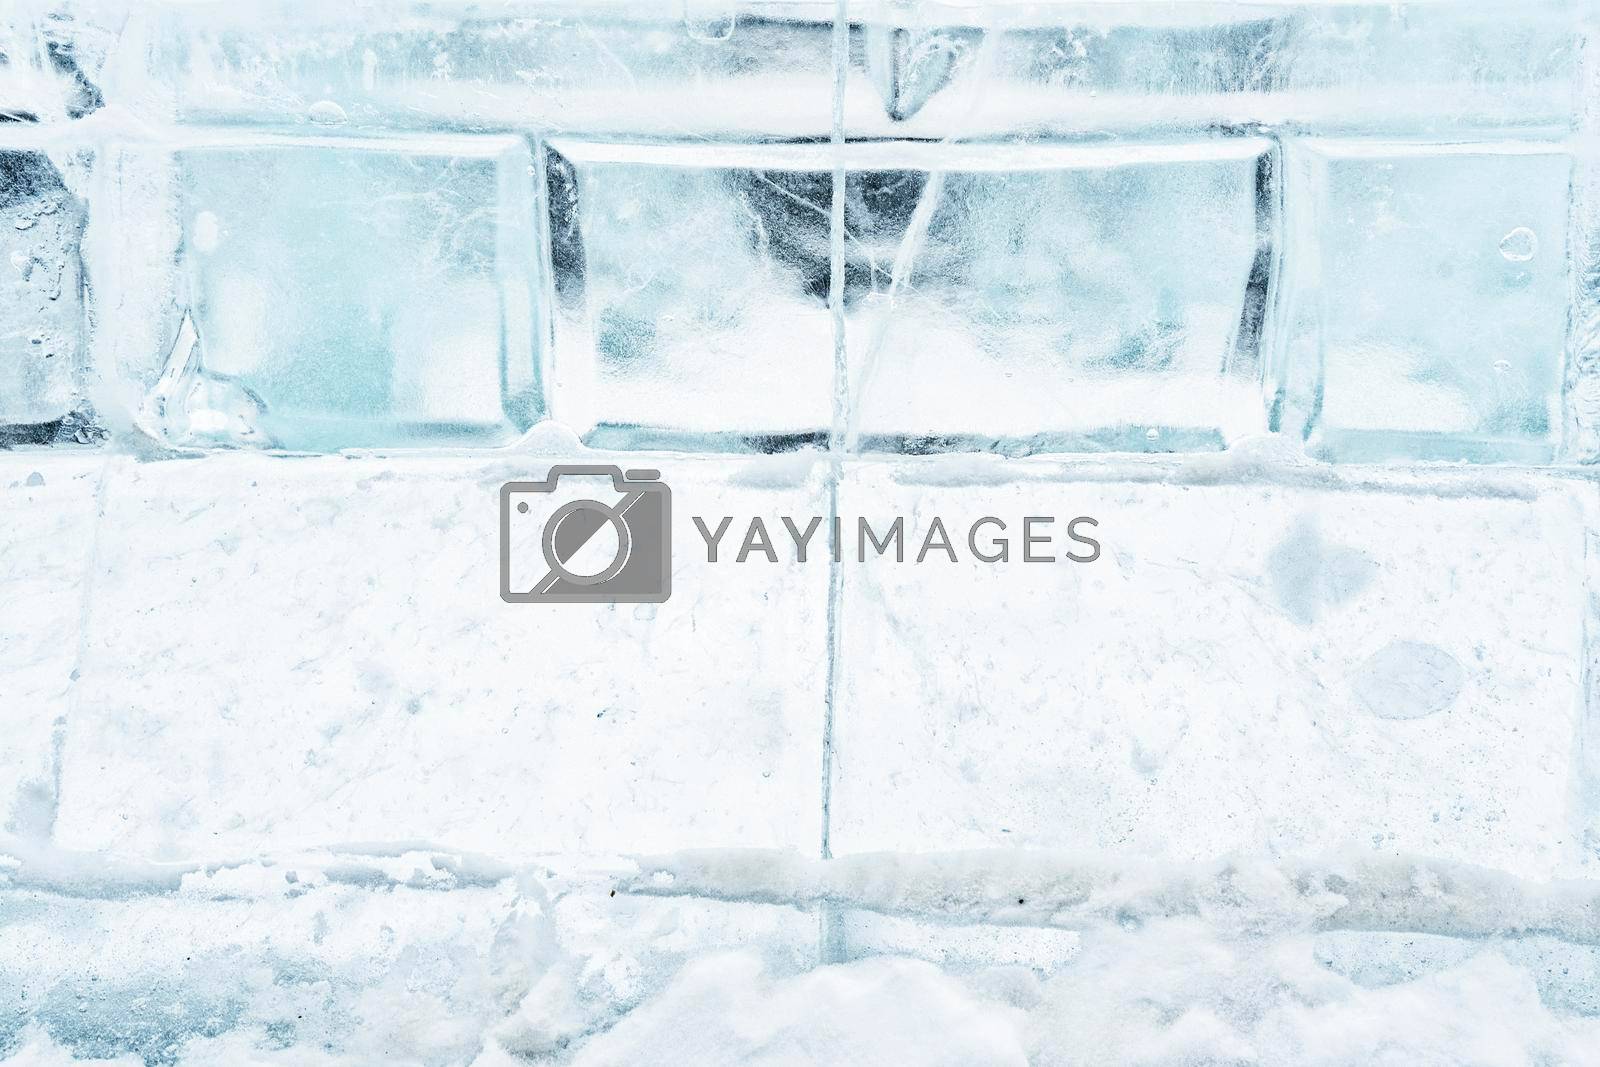 Royalty free image of wall of the house made of ice bricks. by Lena_Ogurtsova